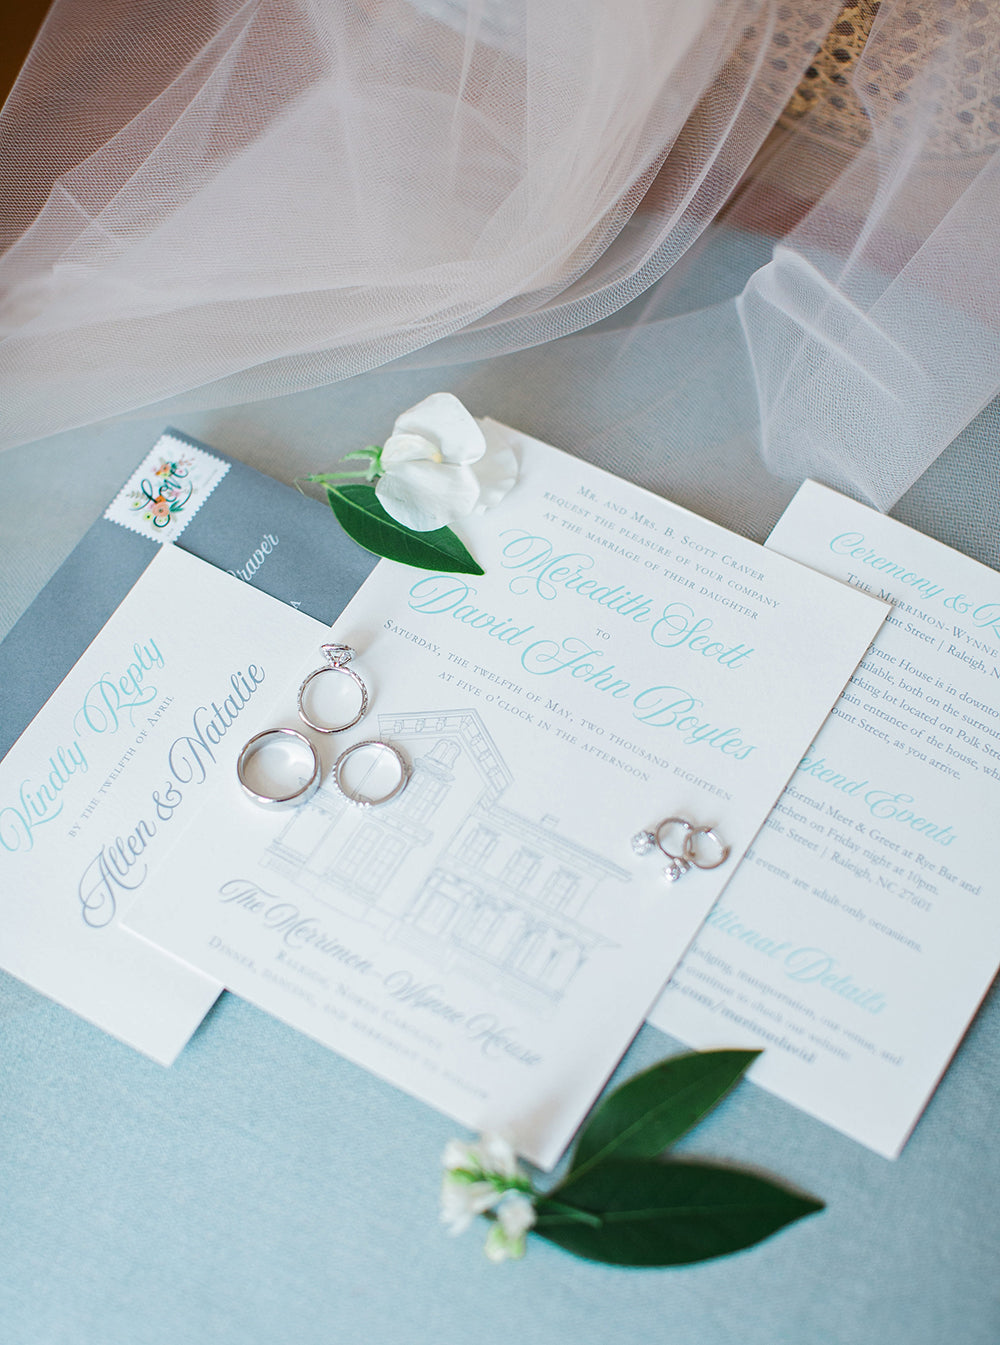 Merrimon-Wynne Wedding Invitation by Scotti Cline Designs | photo by Alaina Ronquillo